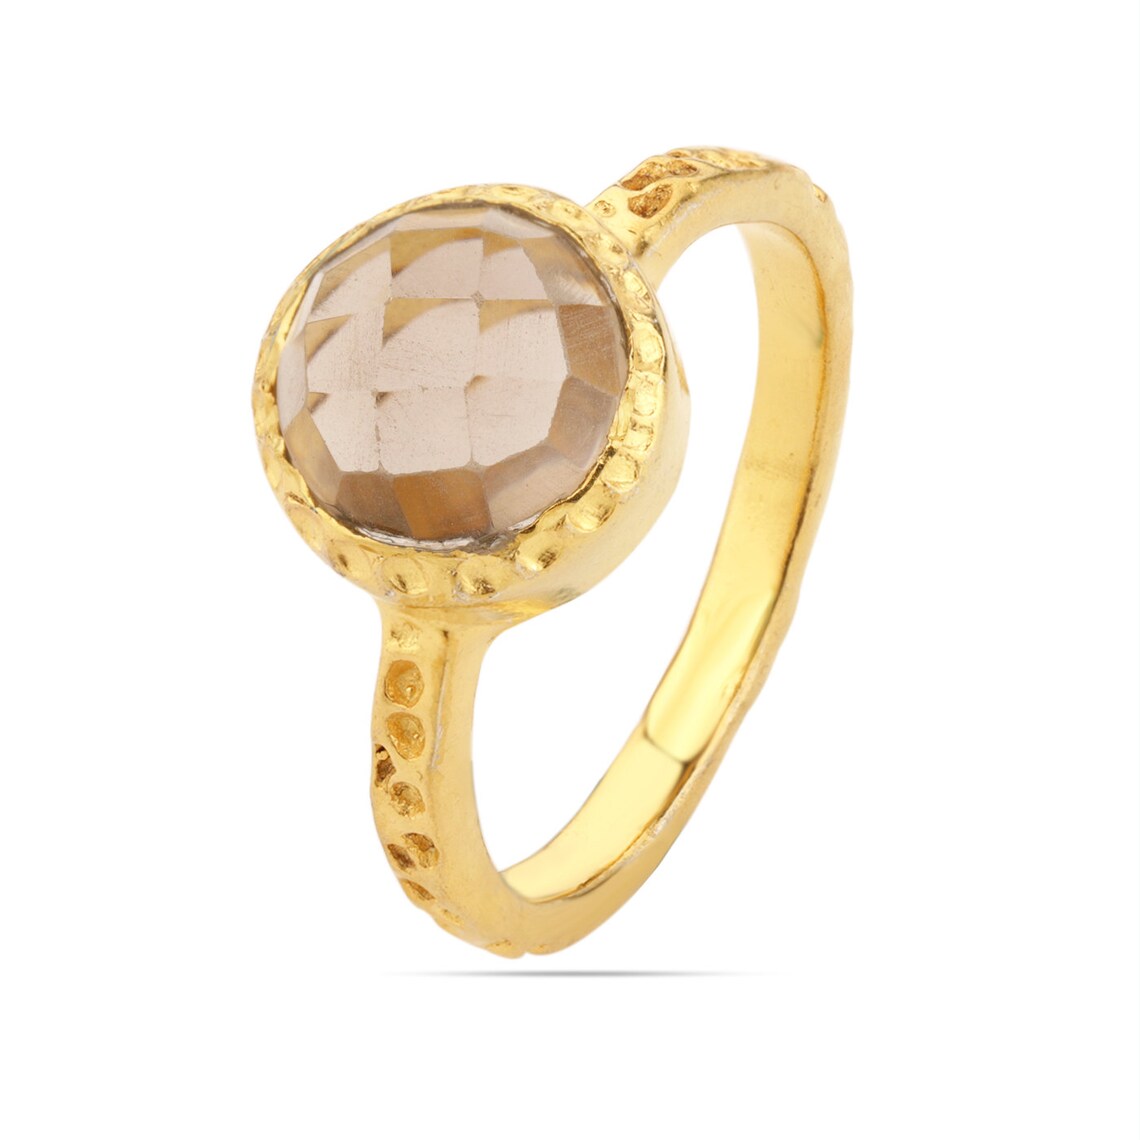 Natural Smoky Quartz Engagement Ring, Wedding Ring, Antique Ring - Smoky Quartz Round Ring, Smoky Gemstone Ring Smoky Quartz Round Ring